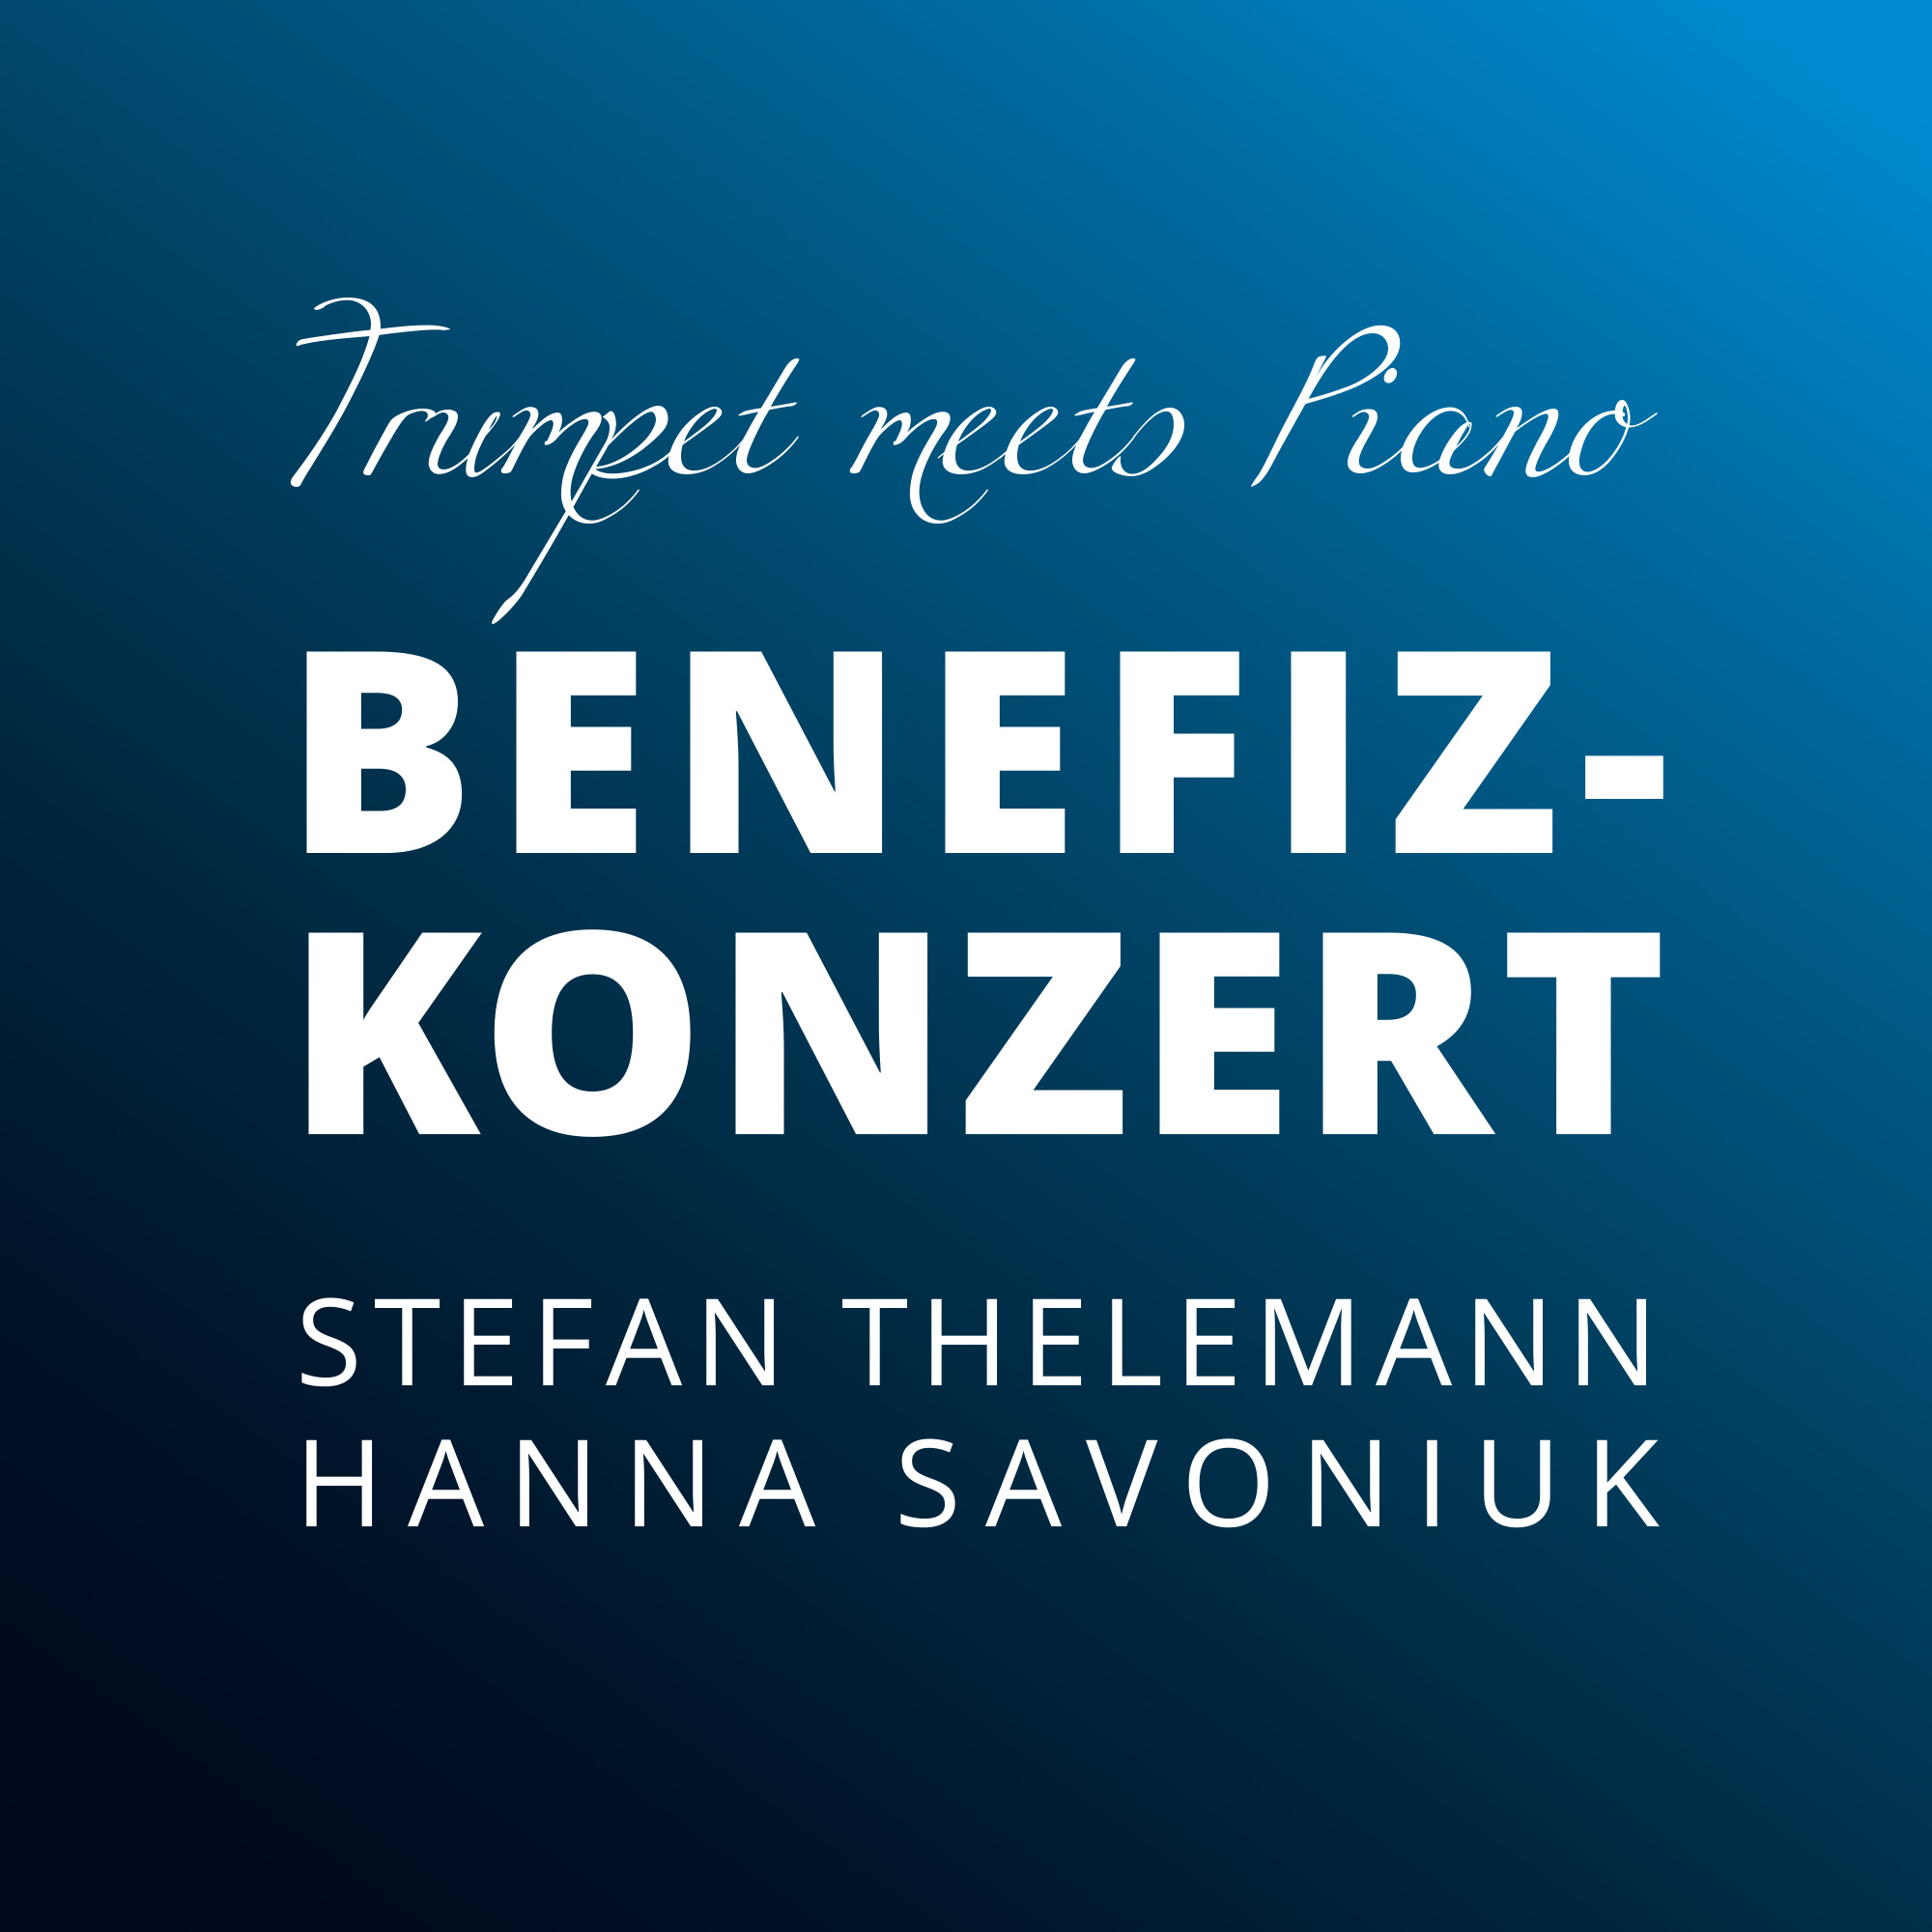 Benewfizkonzert Trumpet meets Piano – Thelemann Savoniuk